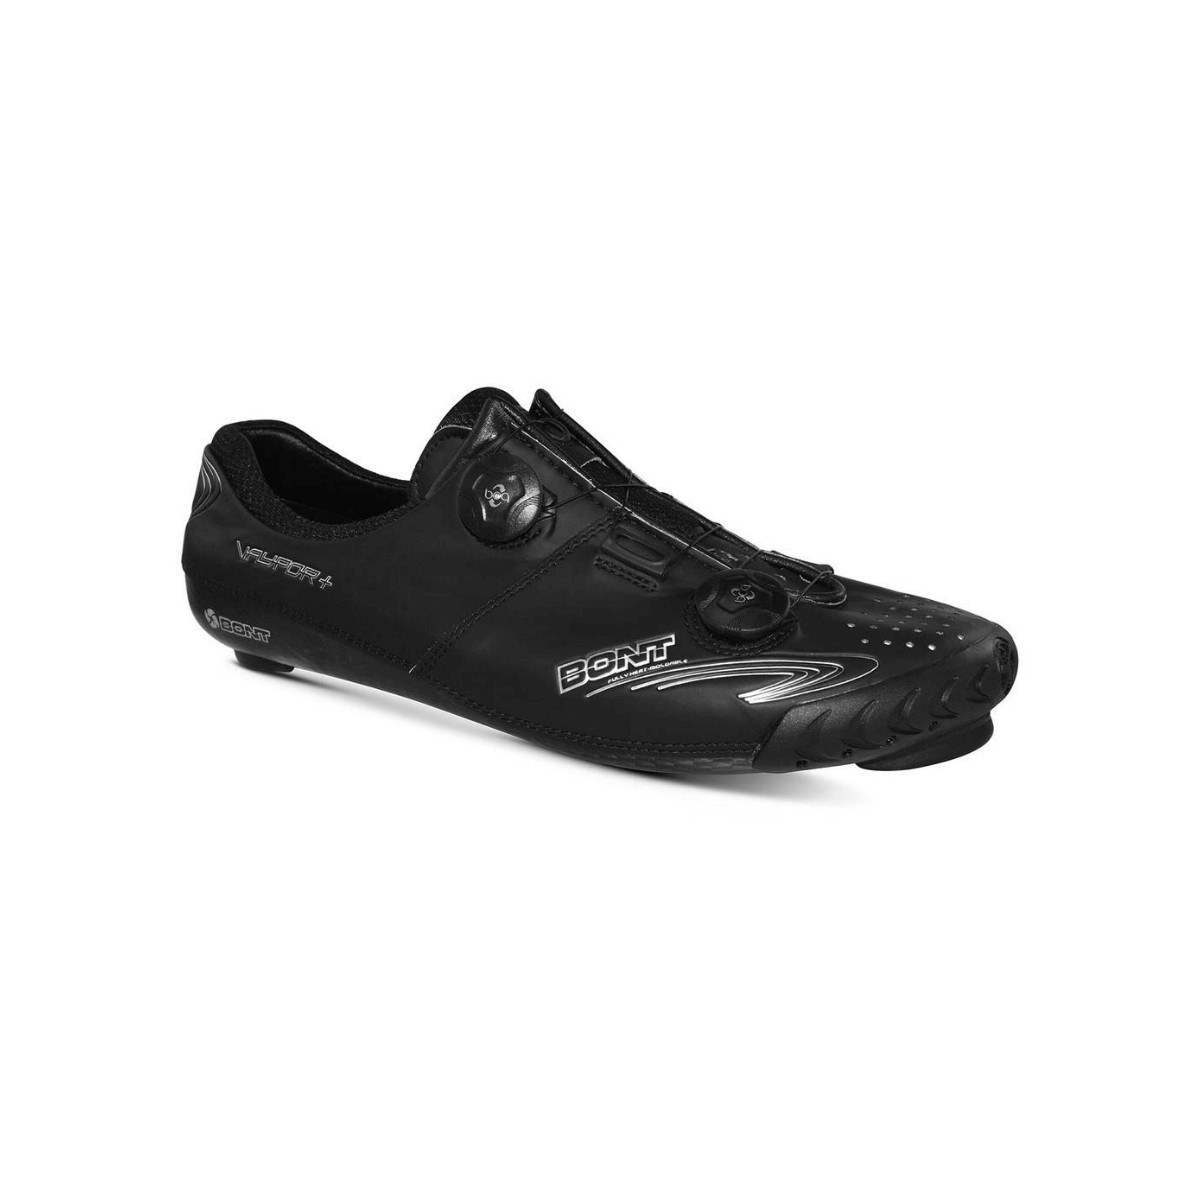 Bont Vaypor + Black Sneakers, Size 41 - EUR